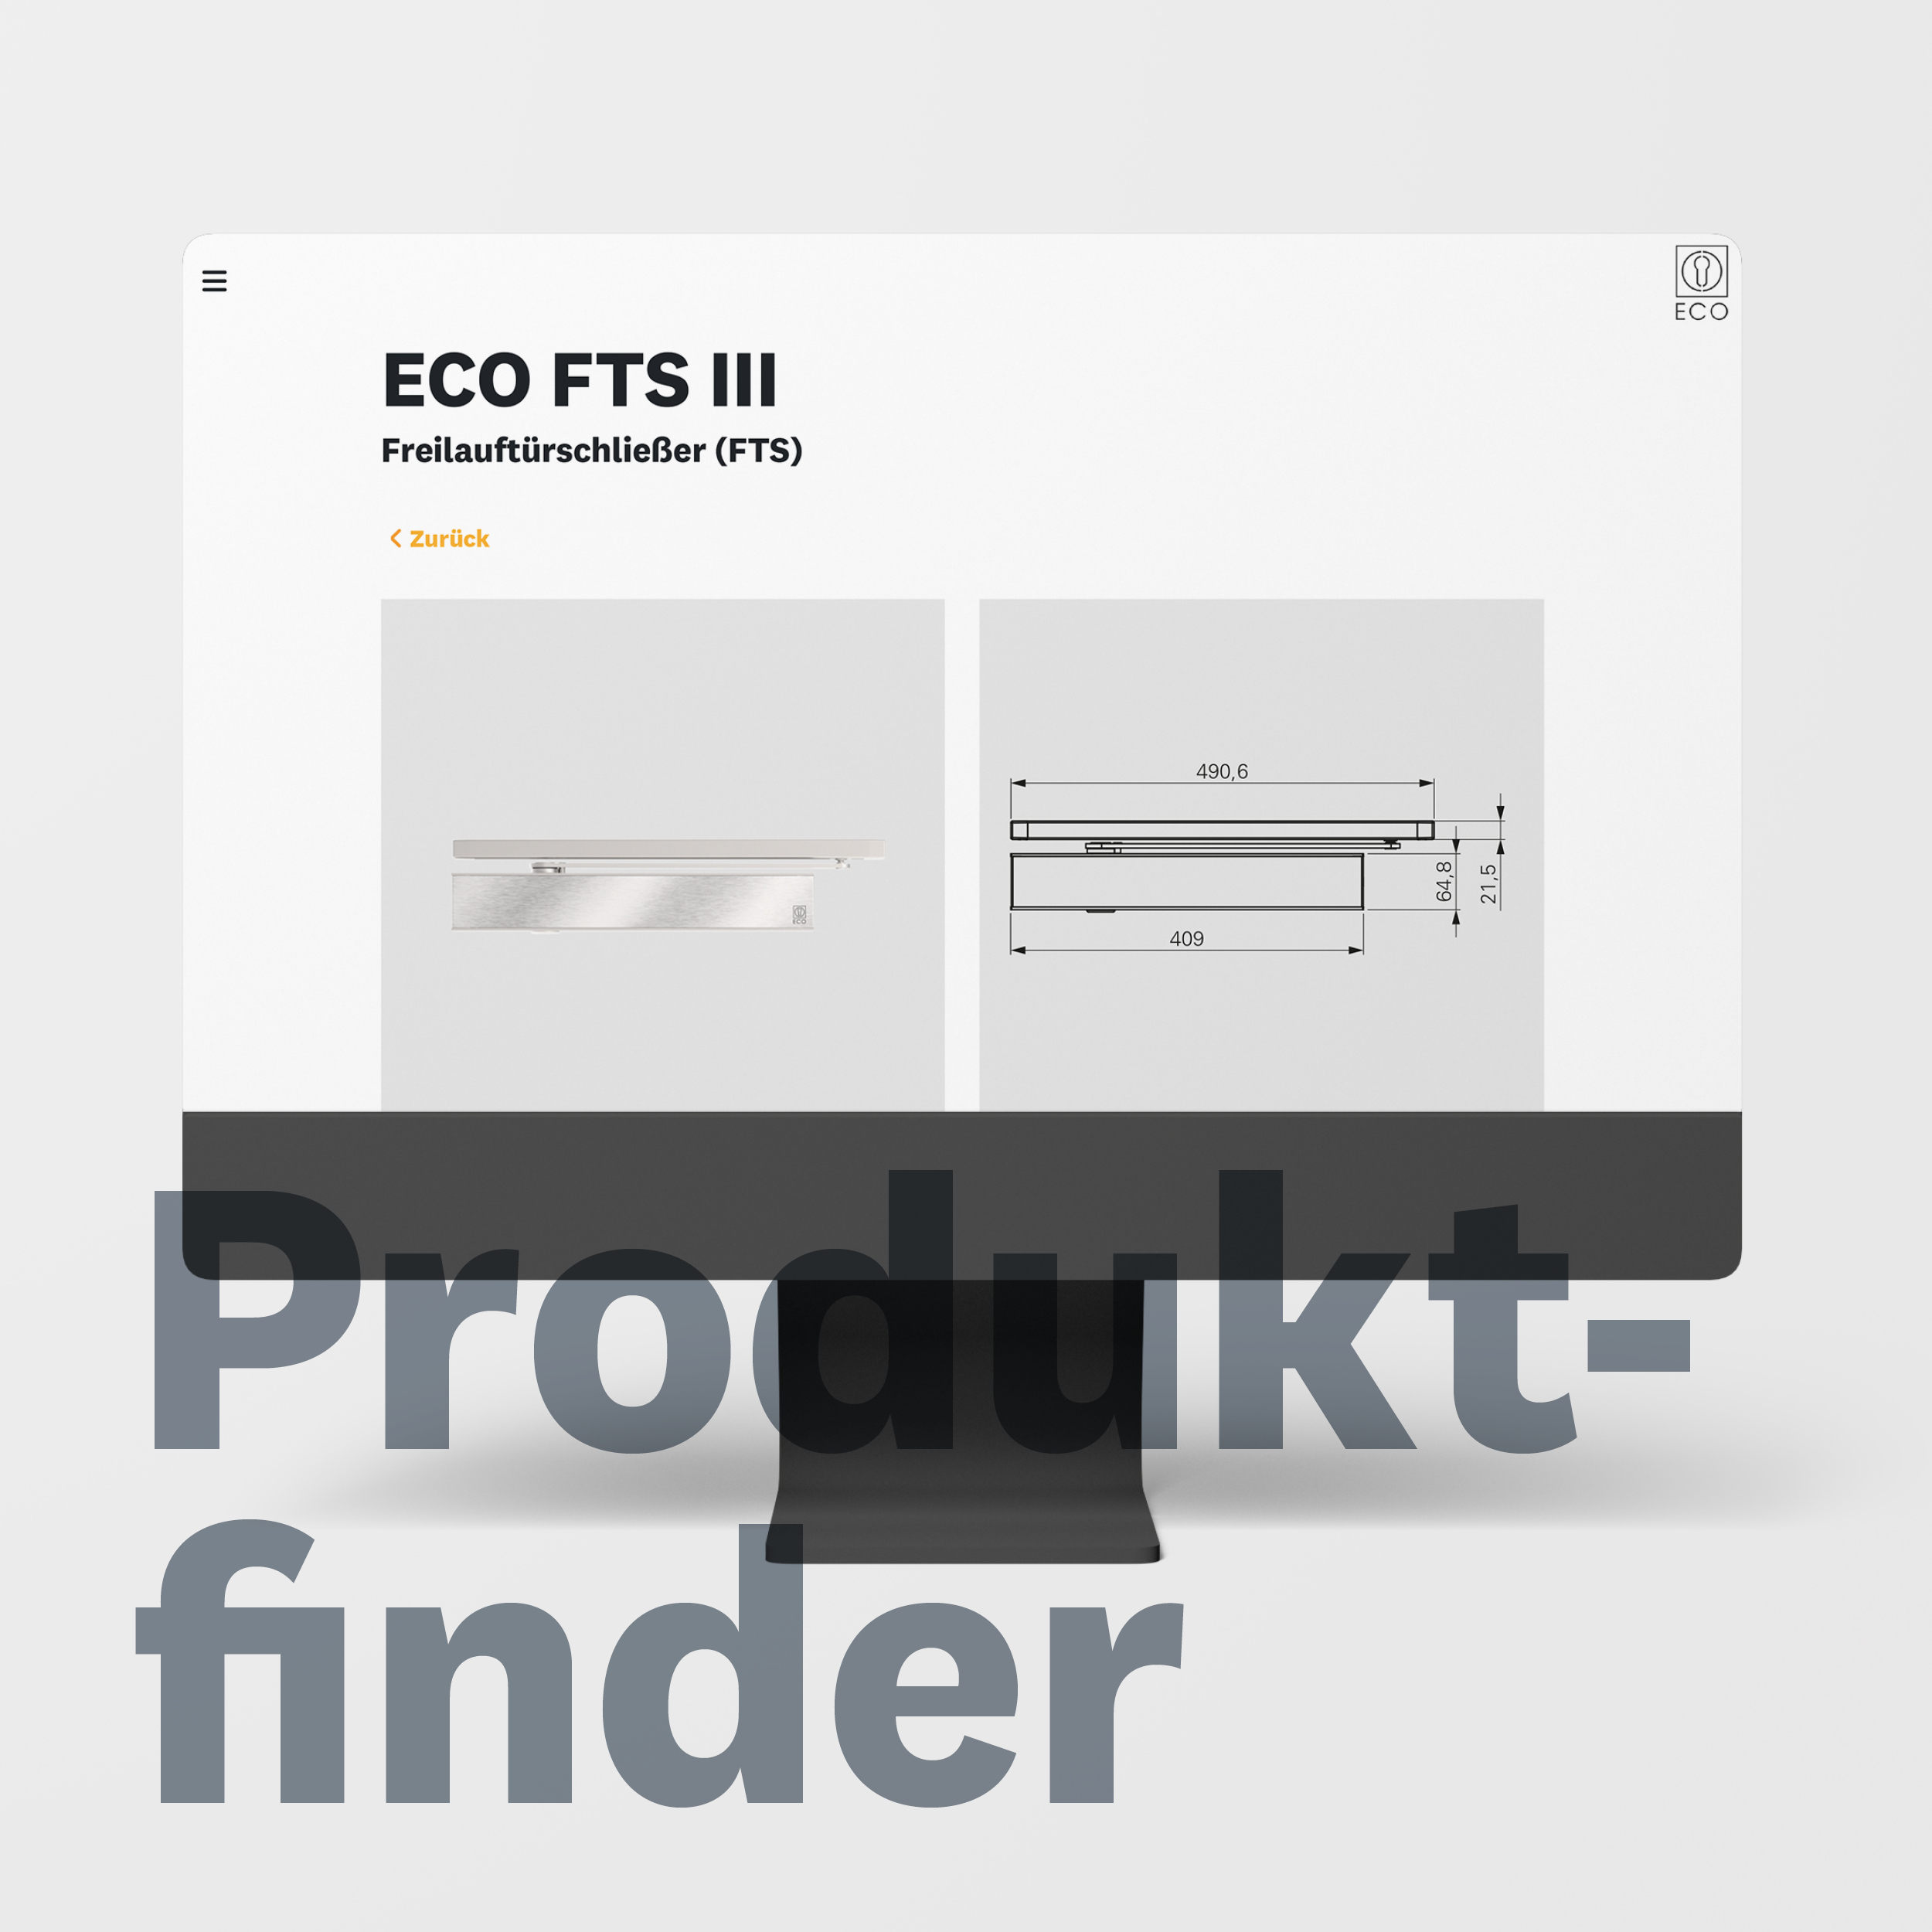 eco-schulte-teaser-produktfinder-fts-iii-de